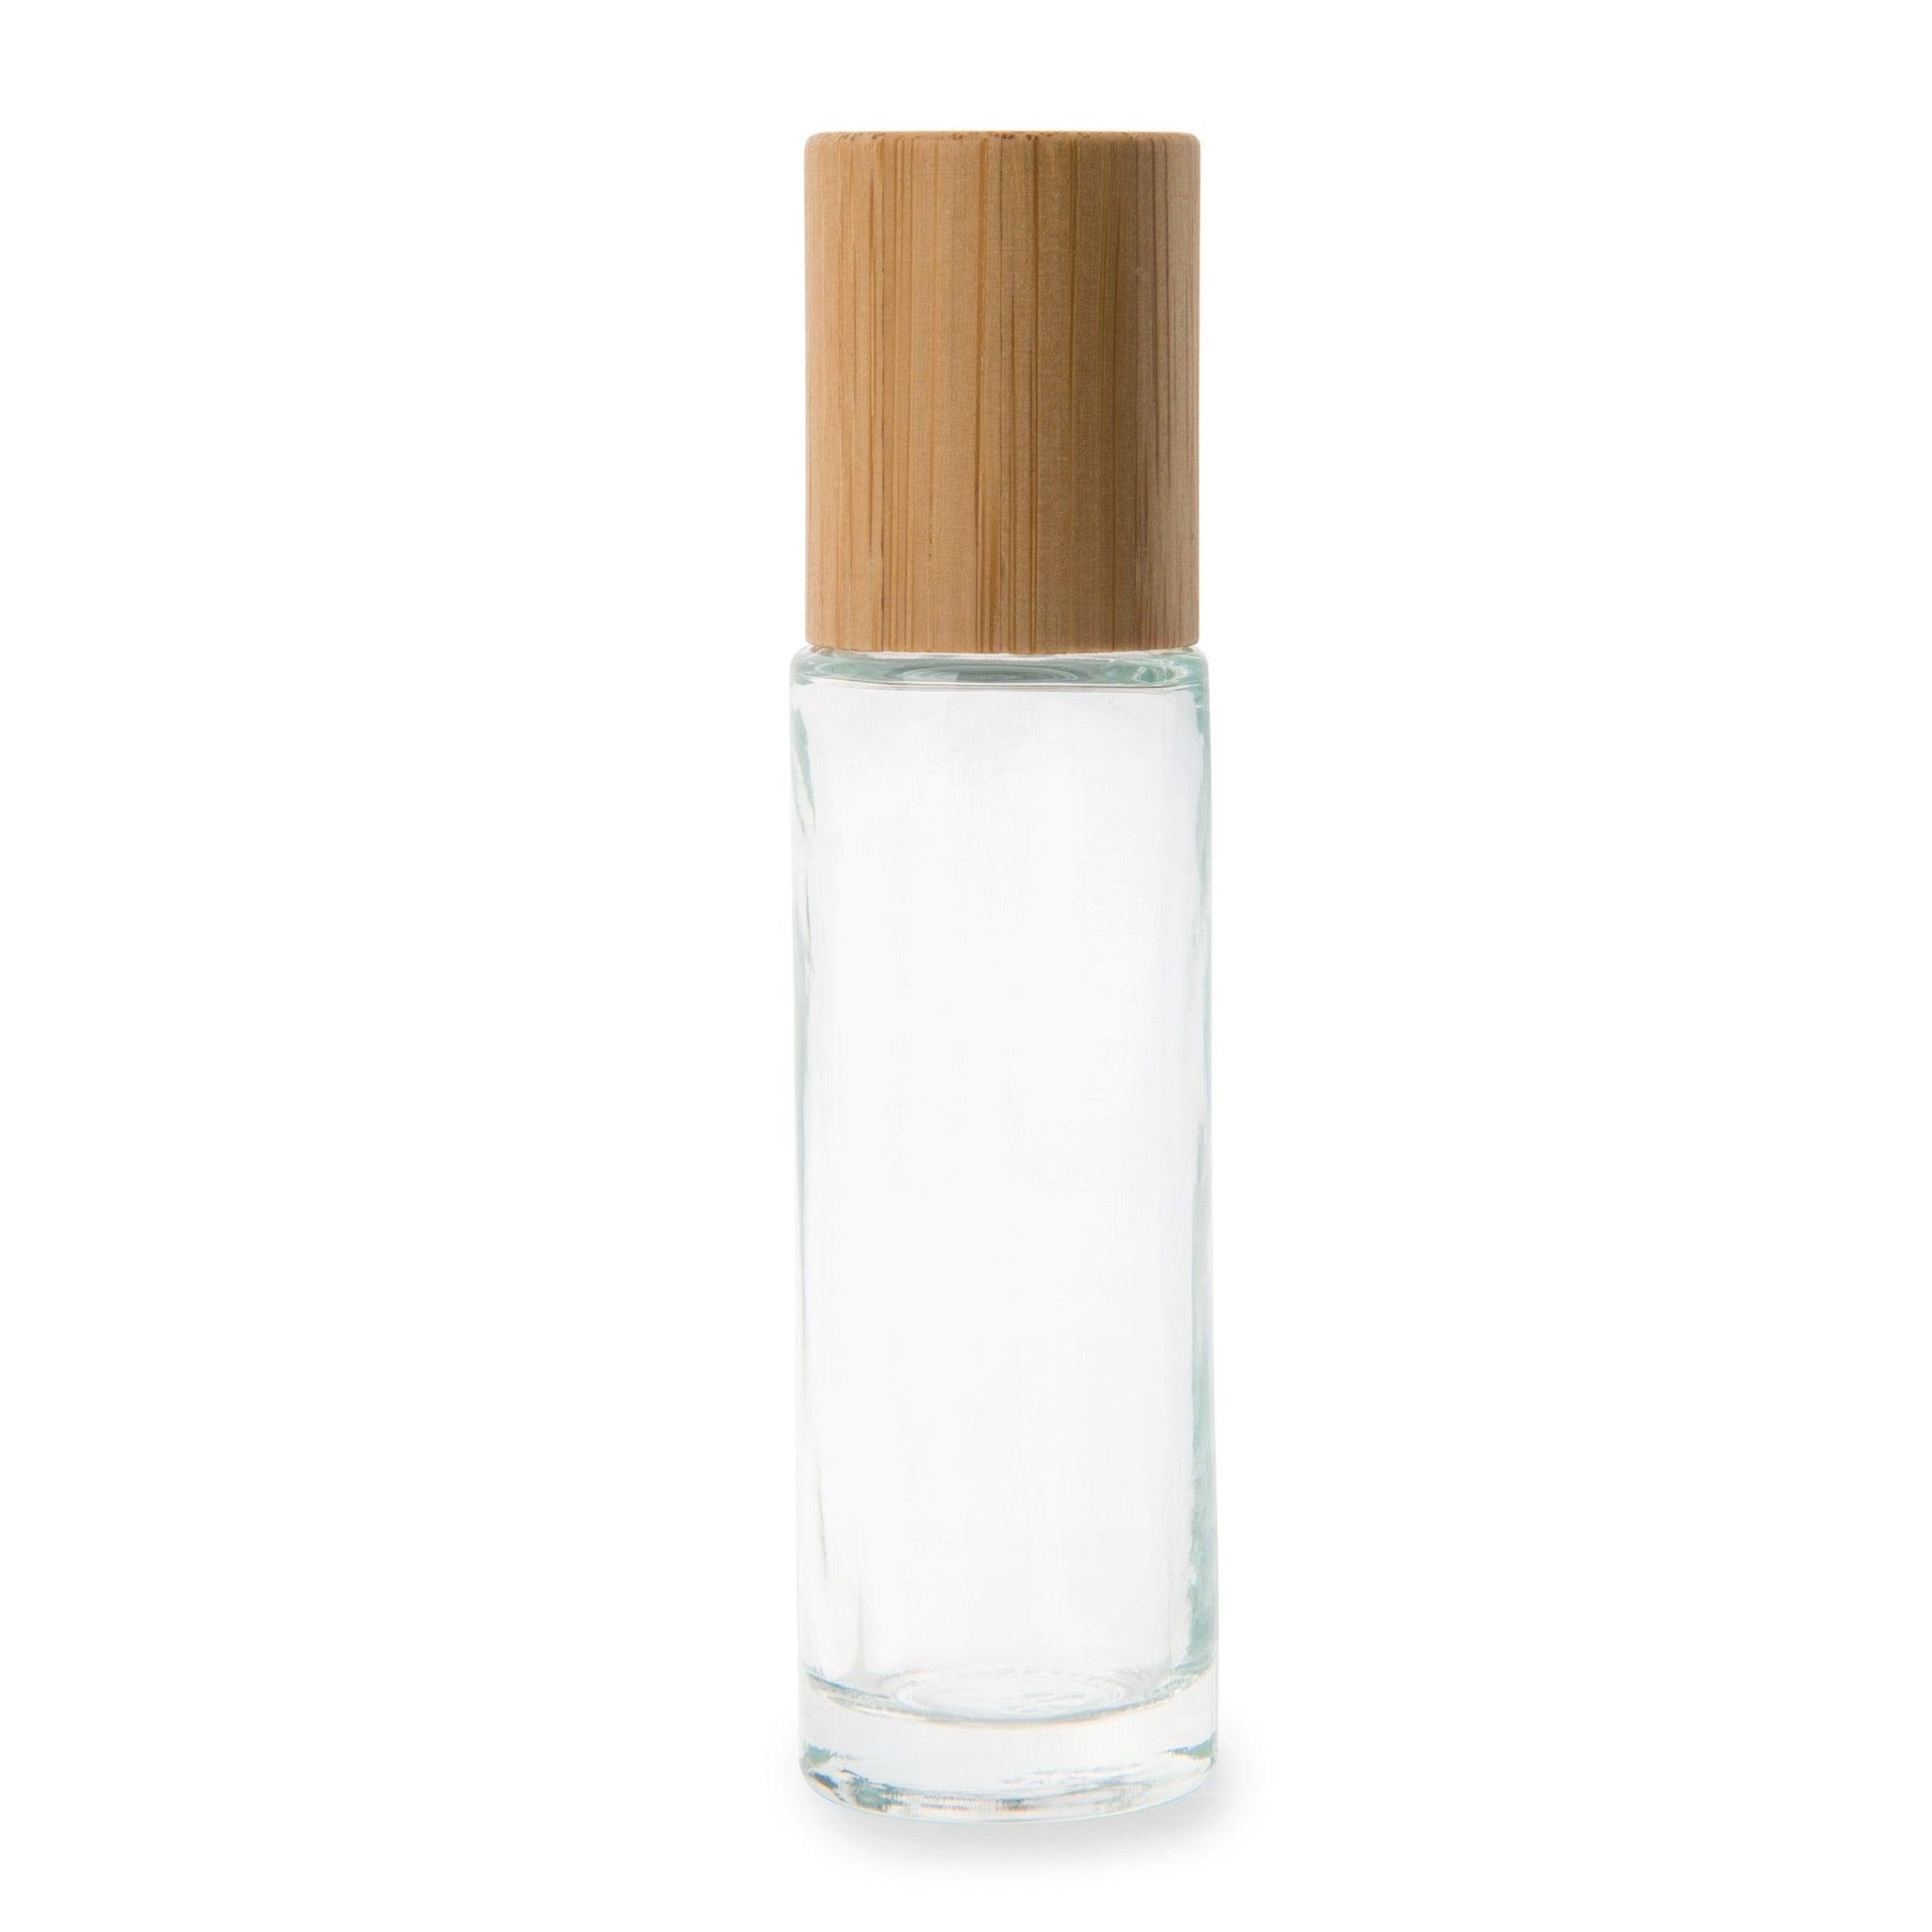 15ml Bamboo Glass Oil Roller Bottle - Little Label Co - Skin Care Rollers - 60%,Bathroom Organisation,Beauty Product Organisation,Kitchen Organisation